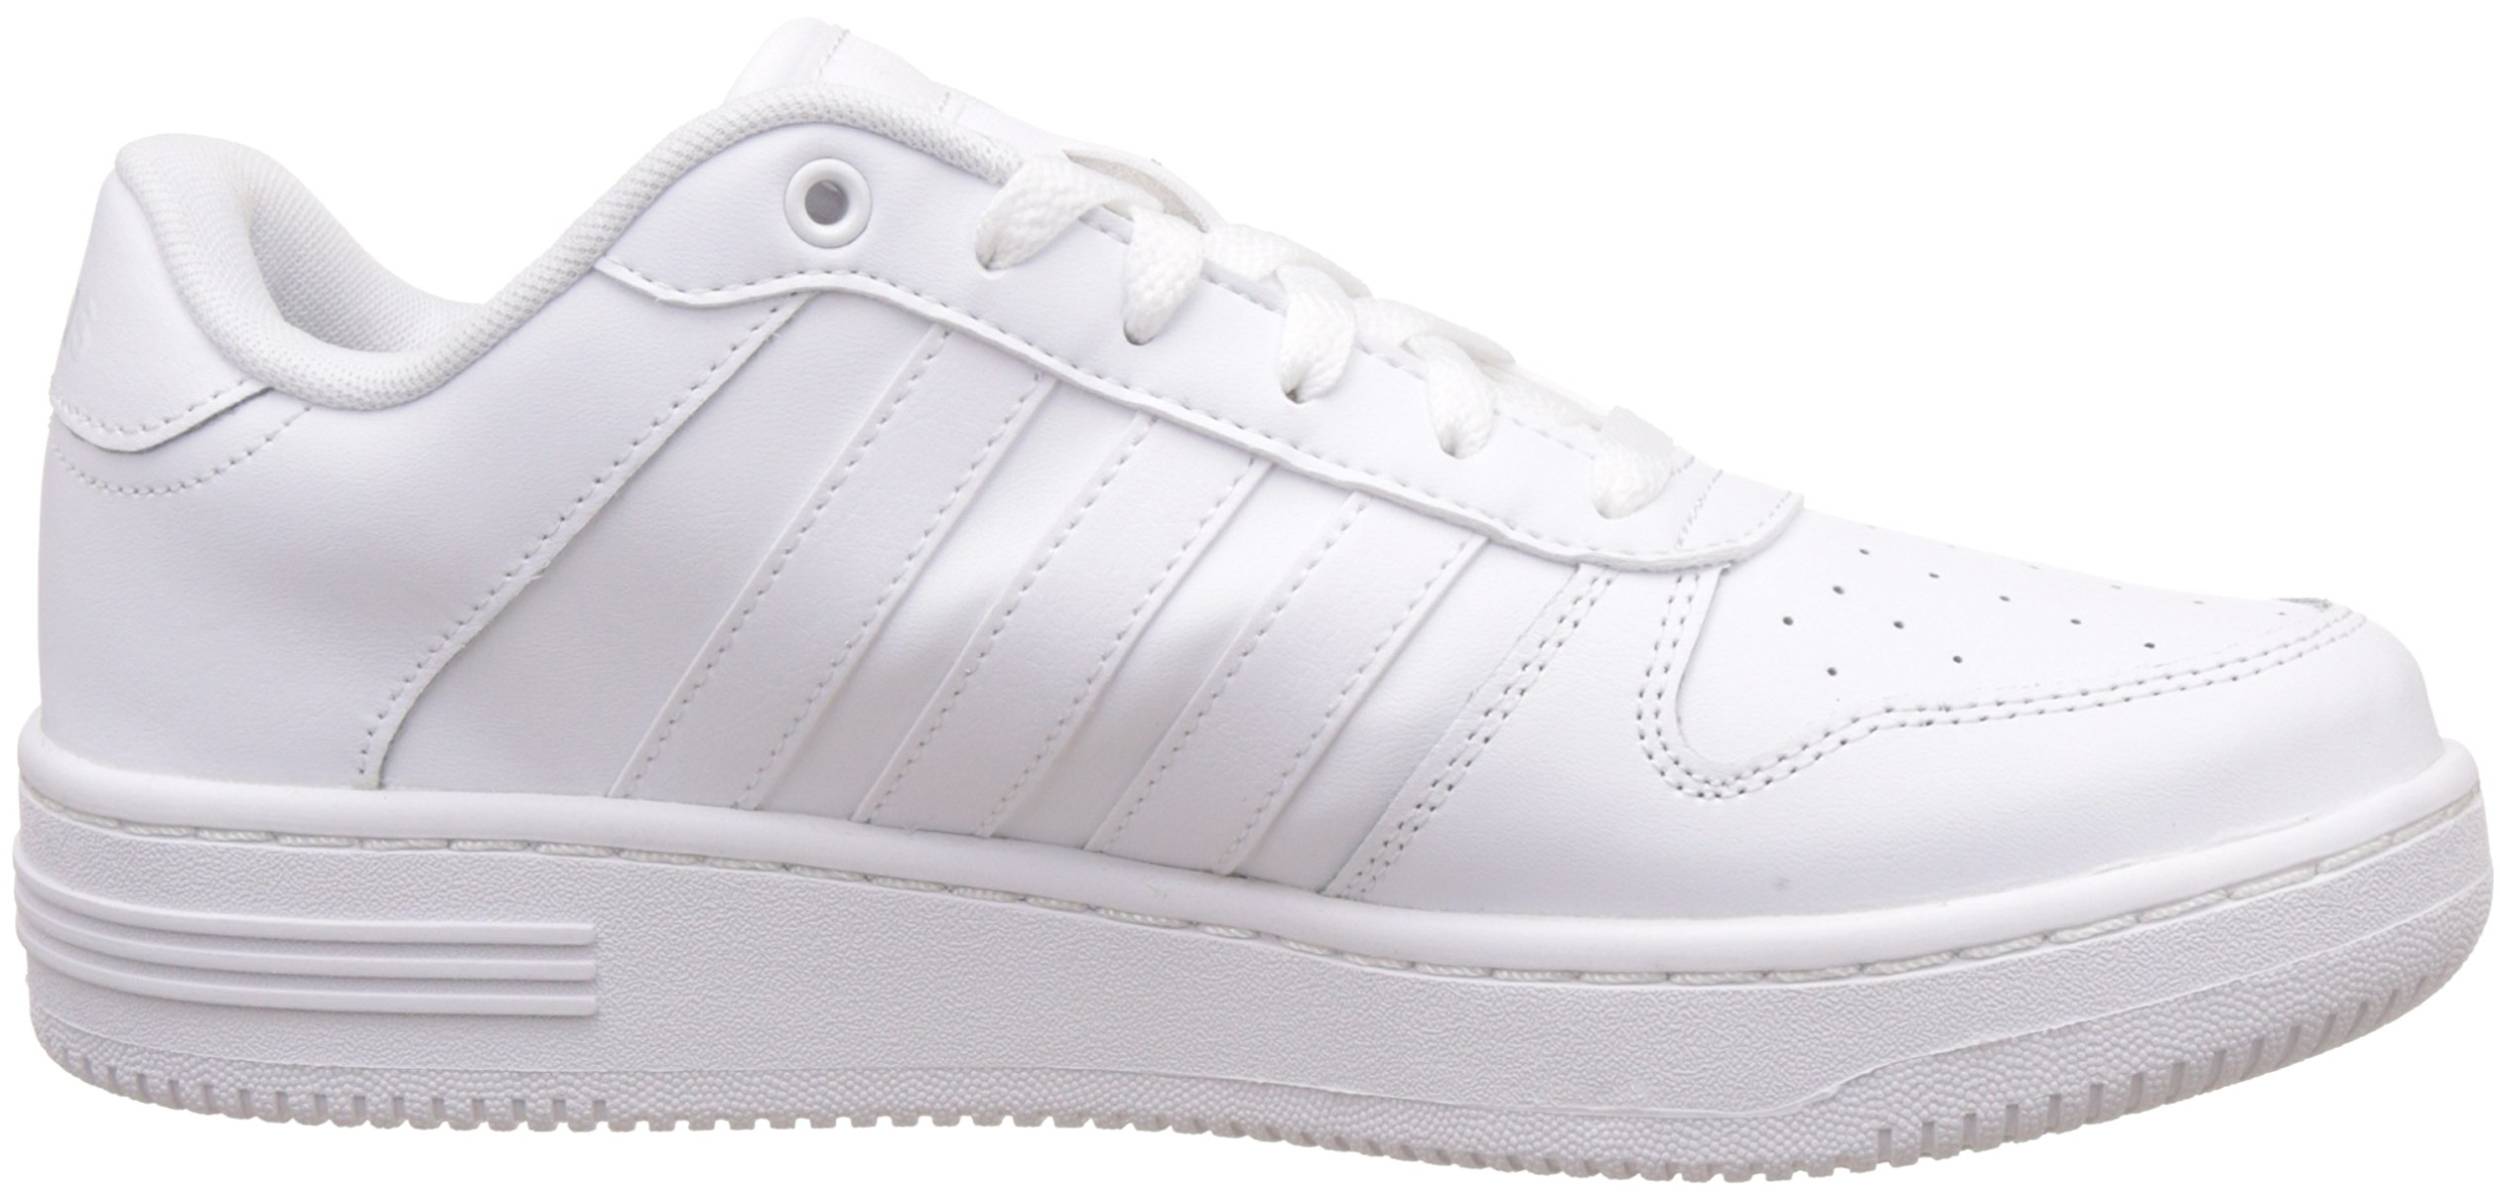 white court shoe